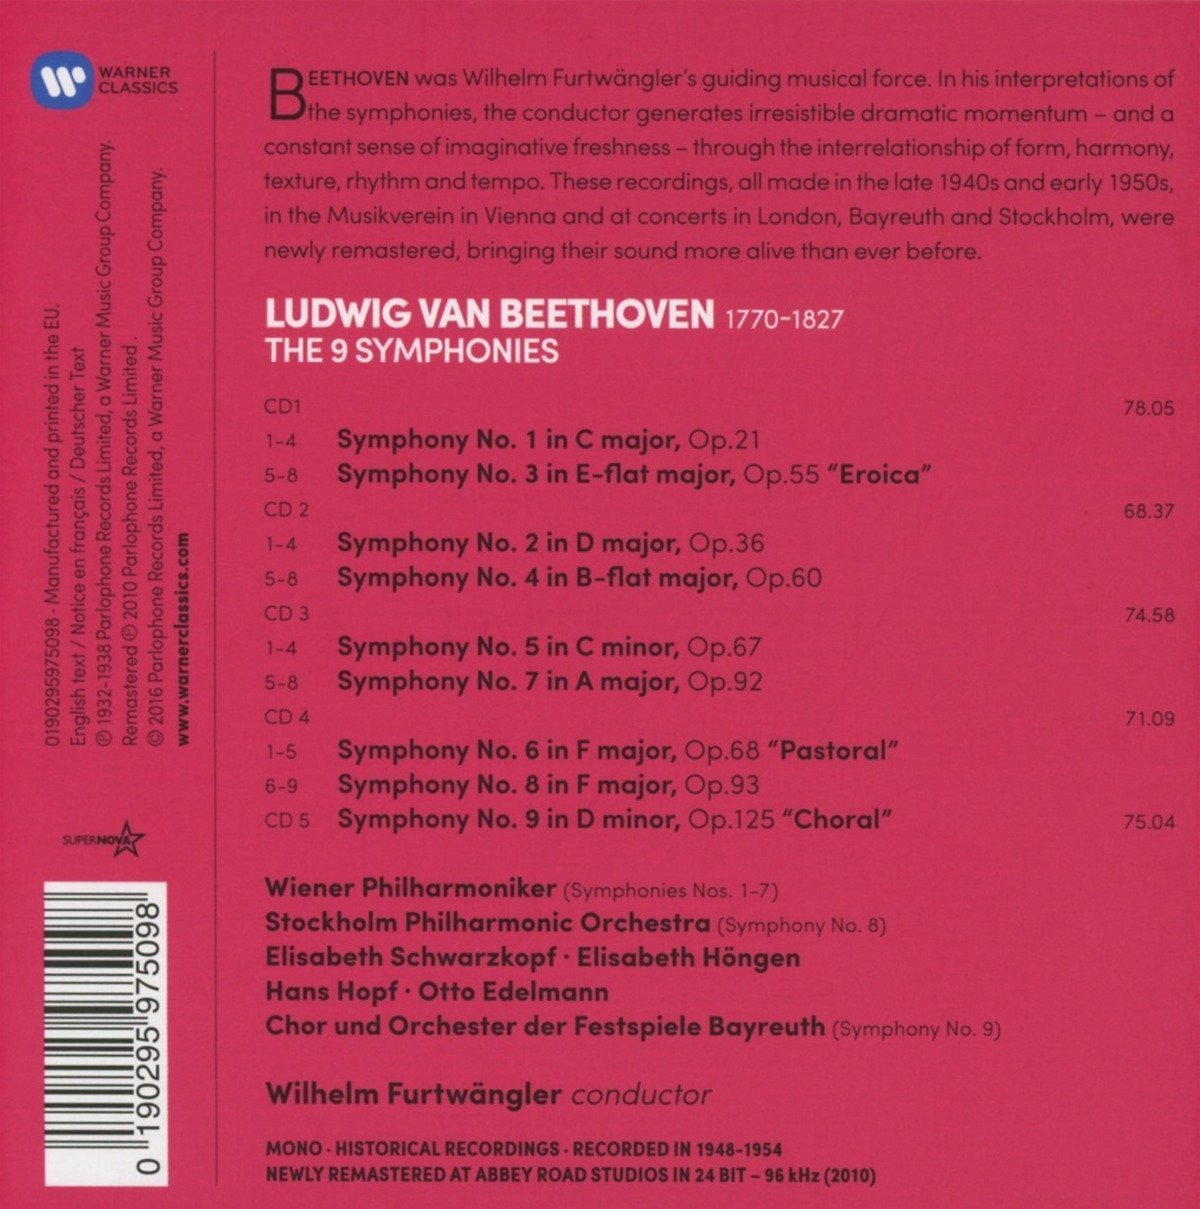 Beethoven: 9 Symphonies - Furtwangler (5 CDs)